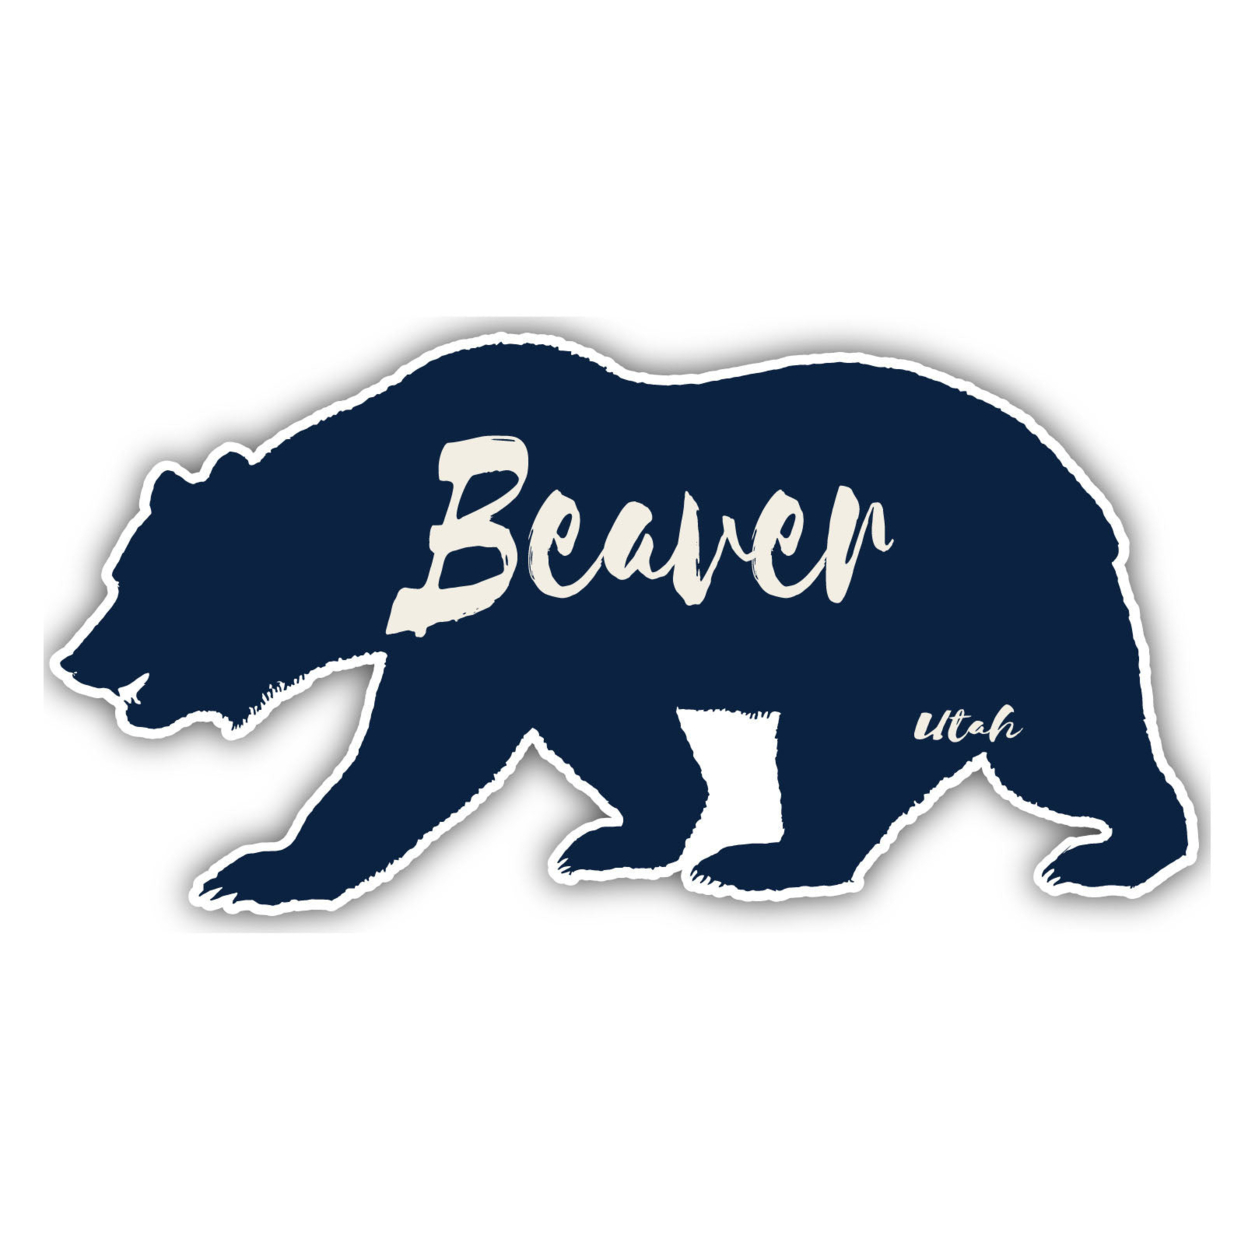 Beaver Utah Souvenir Decorative Stickers (Choose Theme And Size) - 4-Pack, 2-Inch, Bear